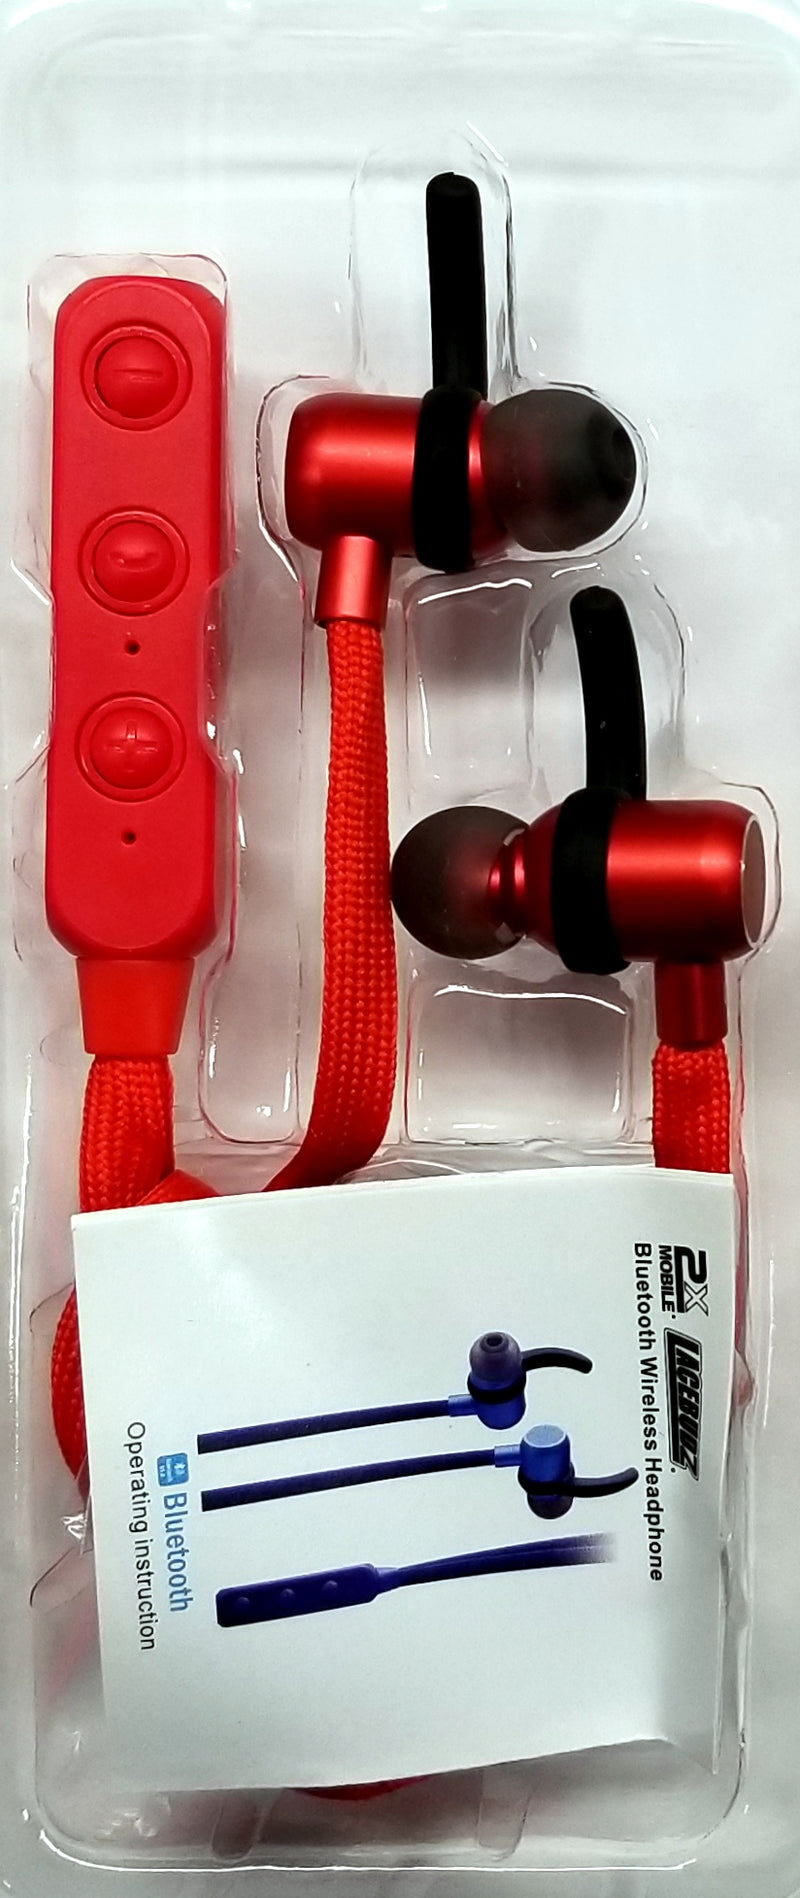 Bluetooth Wireless Lacebudz Earphone - Red Color